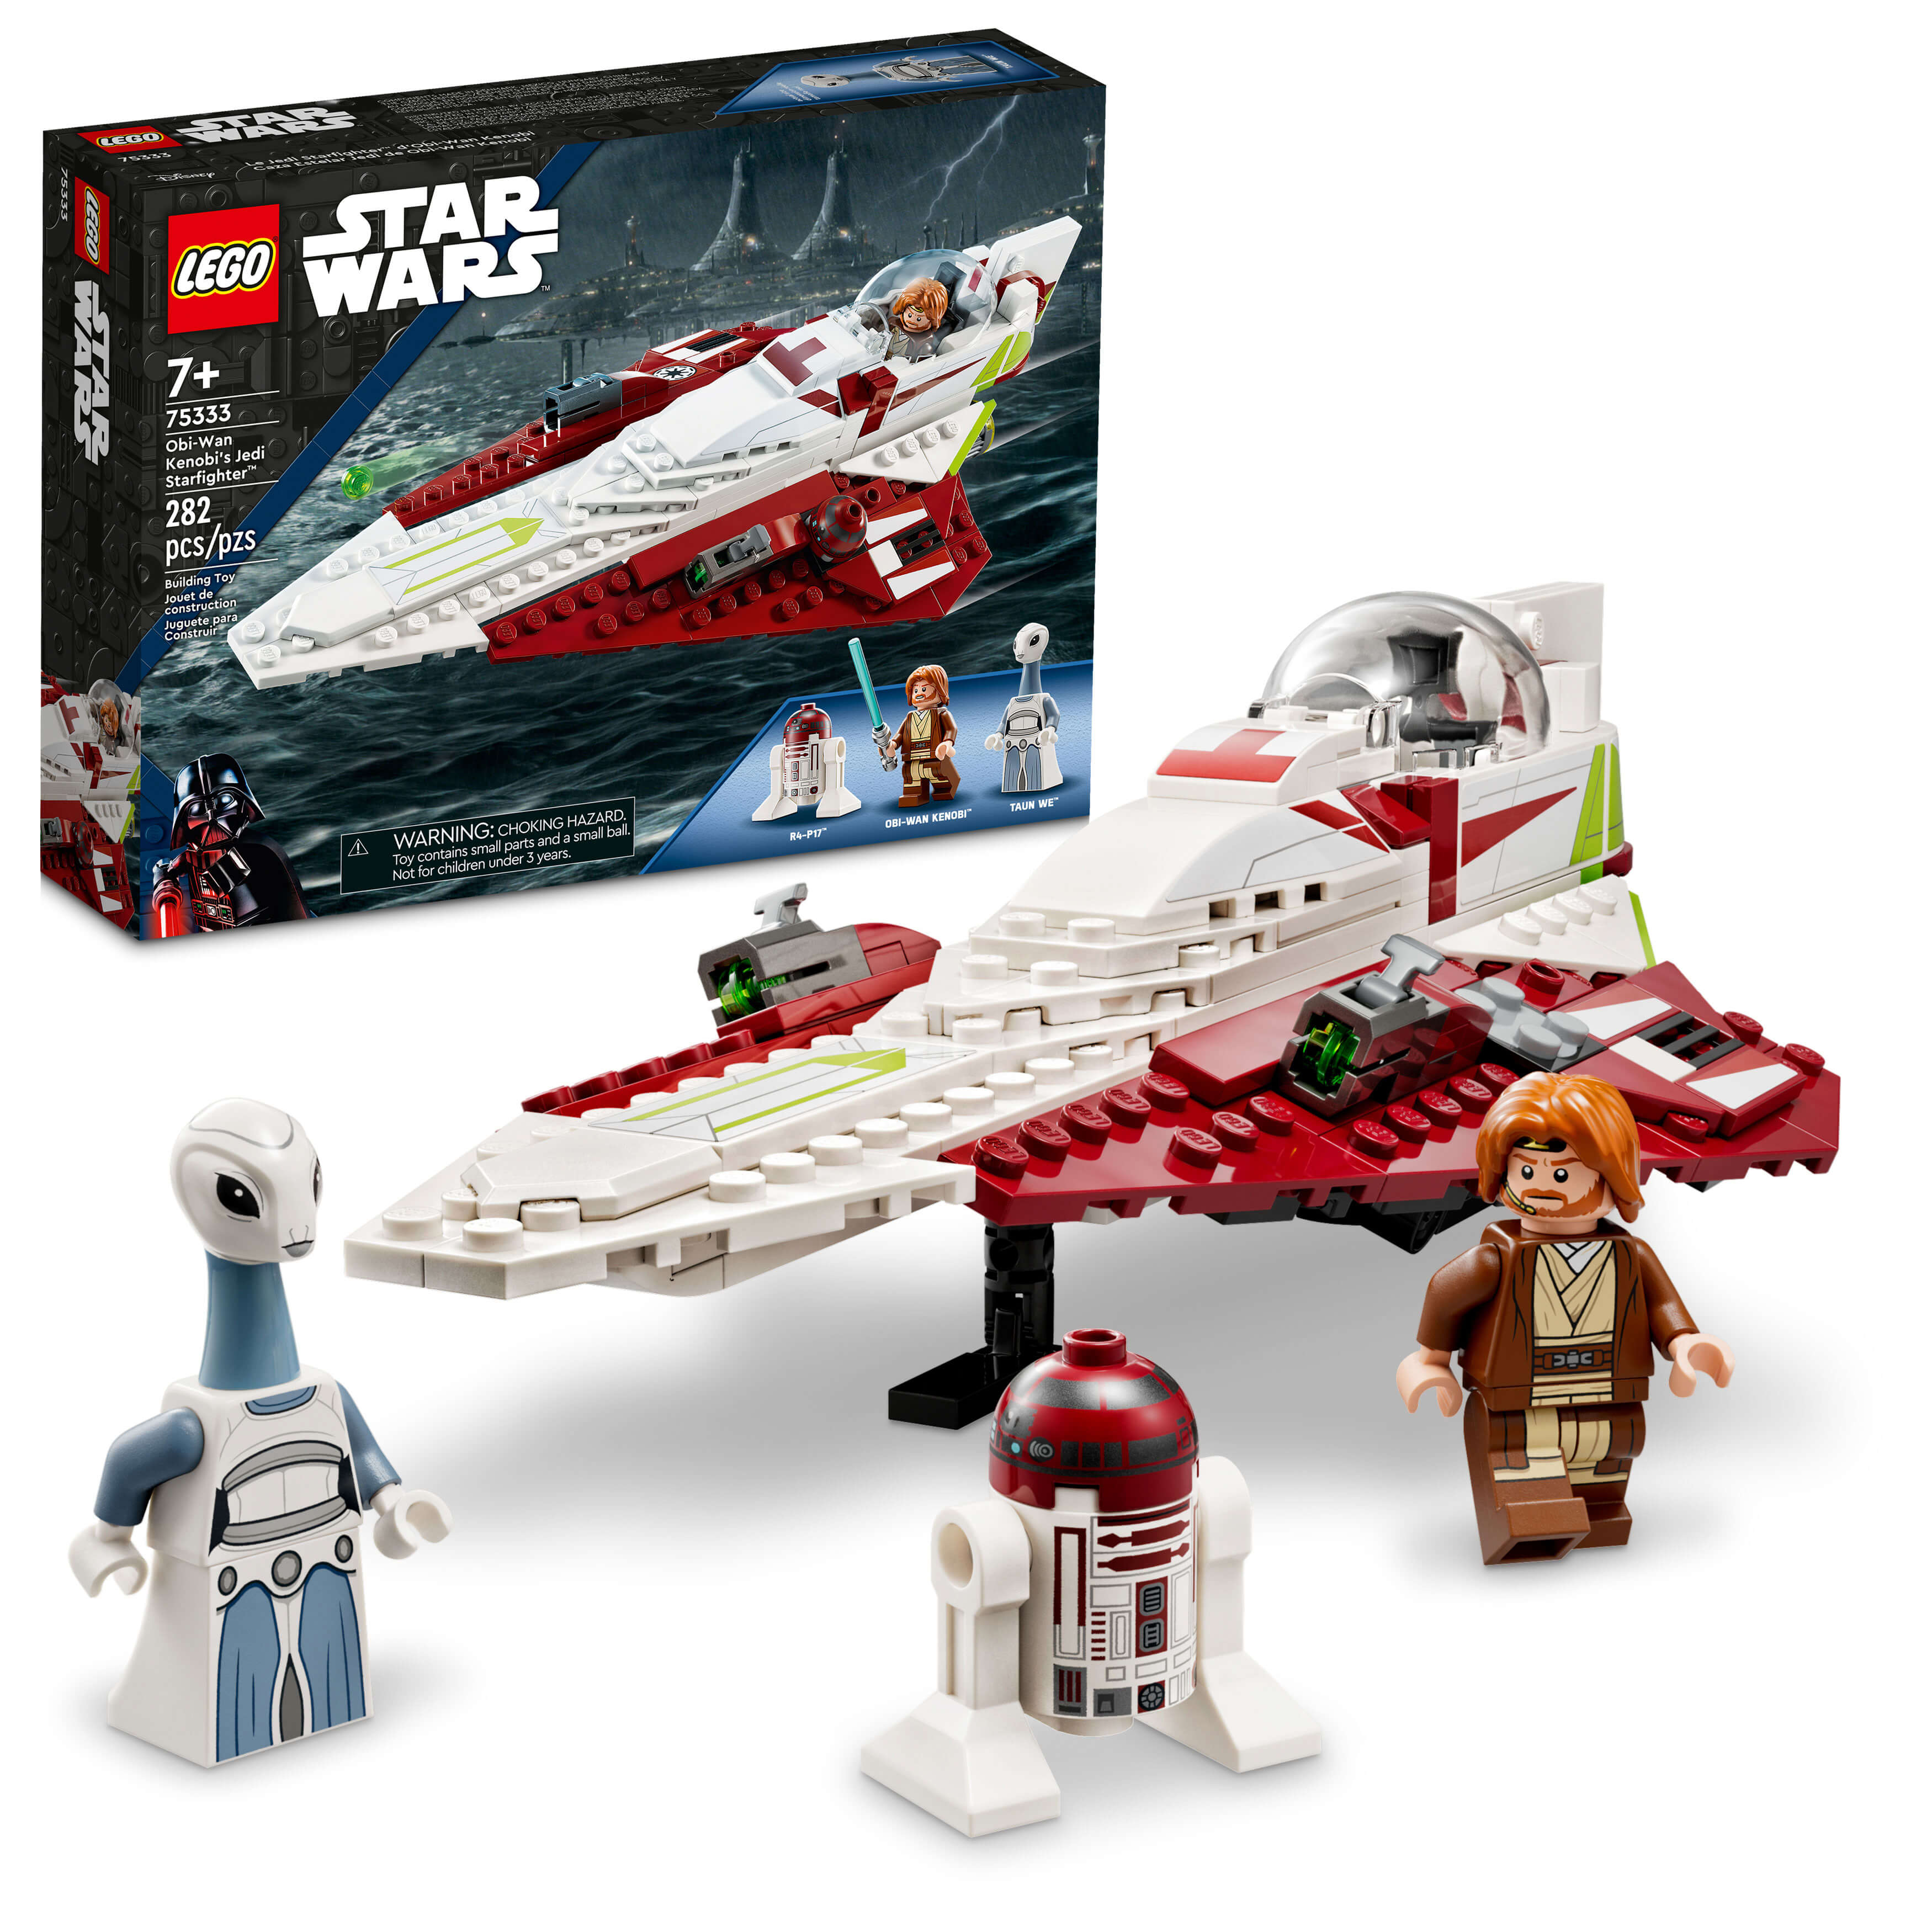 LEGO® Star Wars® Obi-Wan Kenobis Jedi Starfighter 75333 Building Kit (282 Pieces)